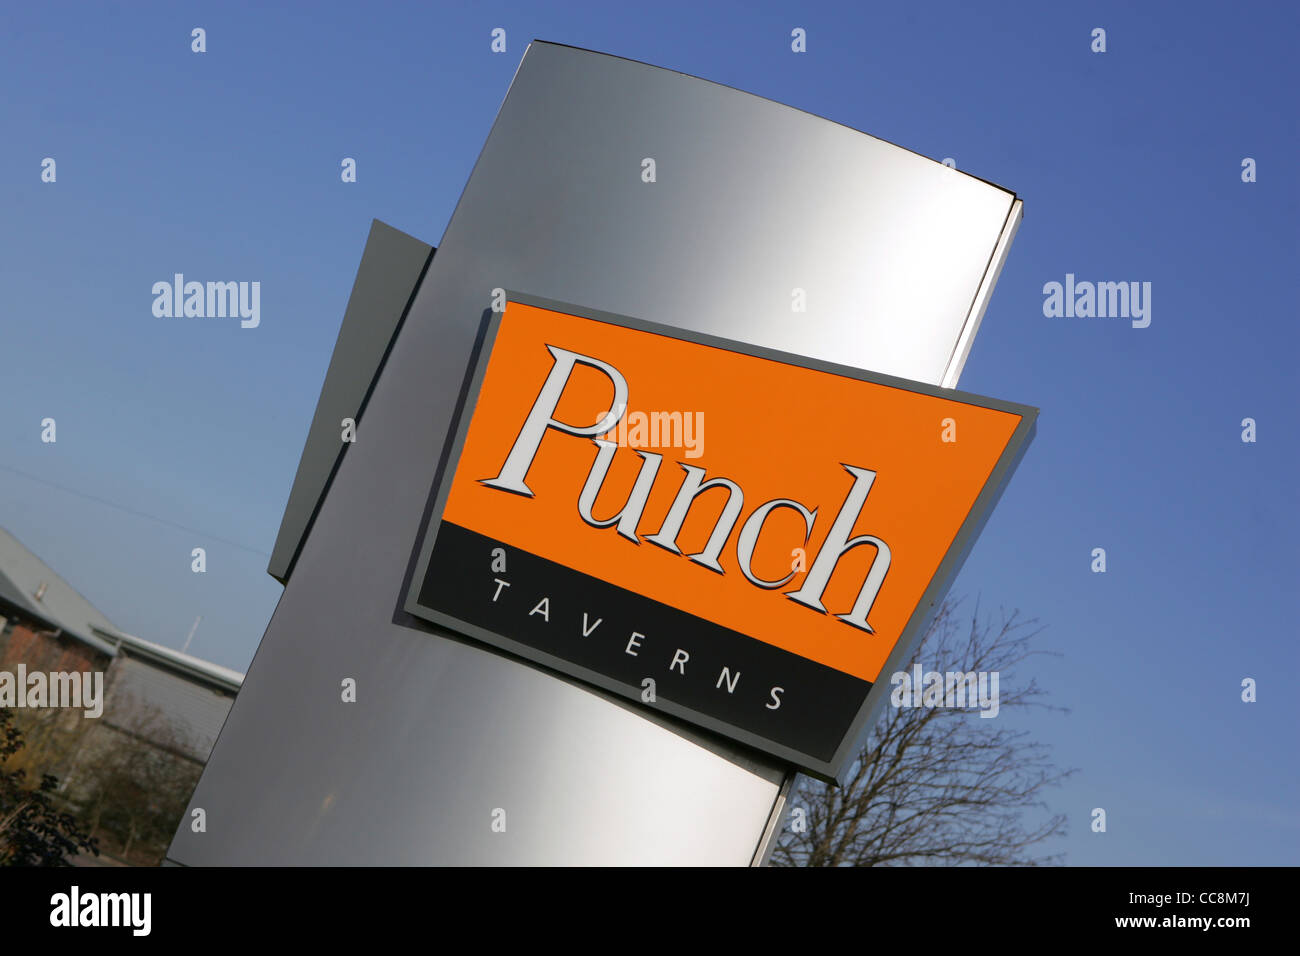 Punch Taverns head office, Jubilee House, burton on trent 2012 Stock Photo